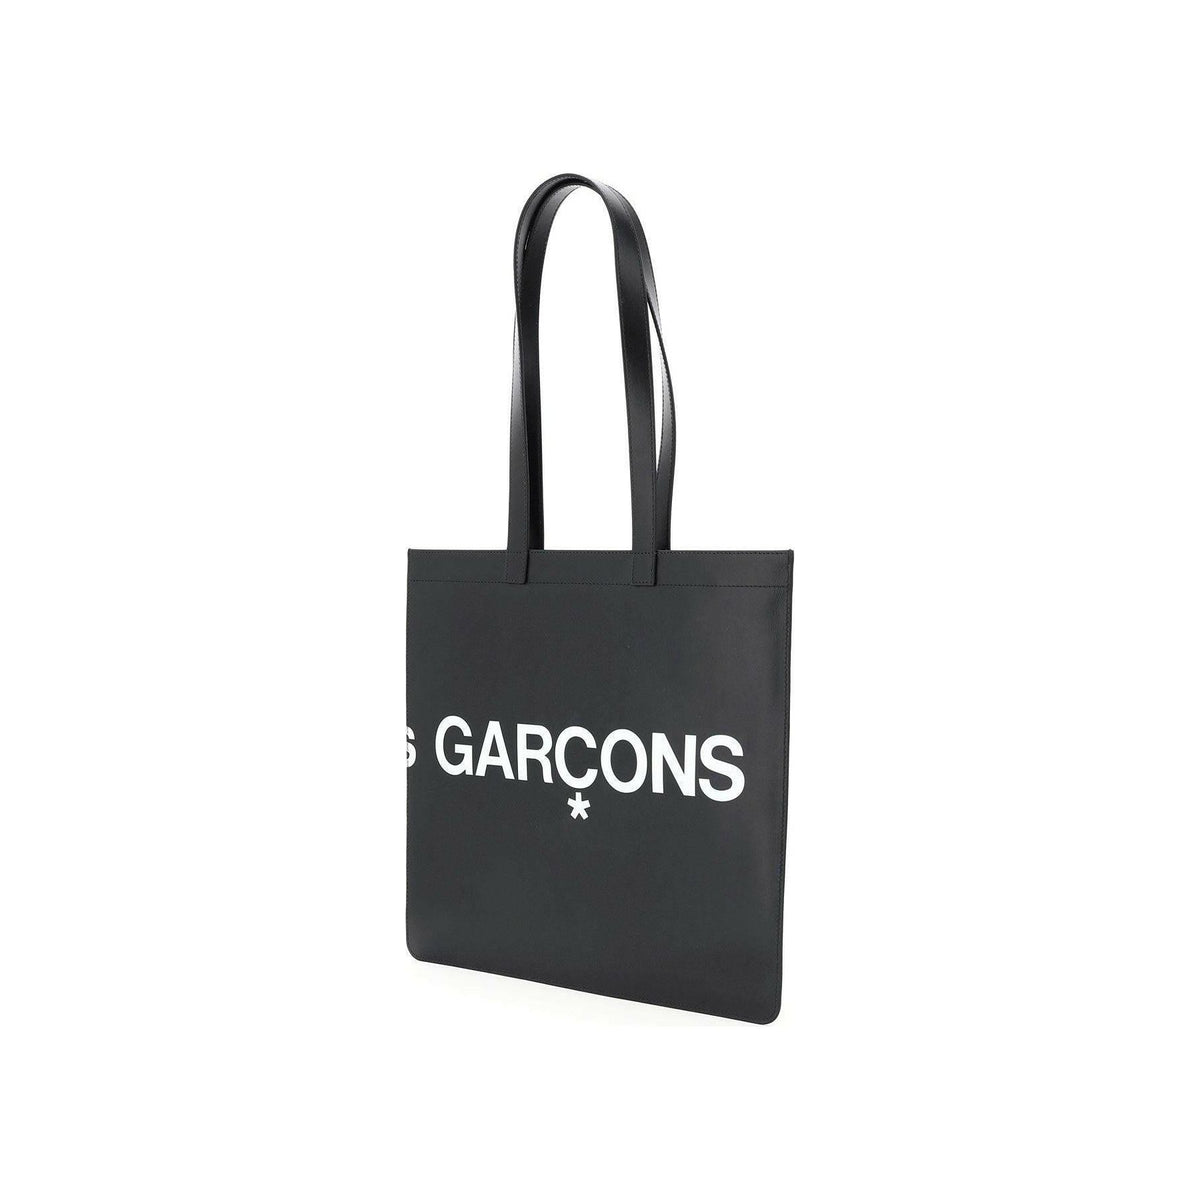 Comme Des Garcons Wallet Leather Tote Bag With Logo - JOHN JULIA